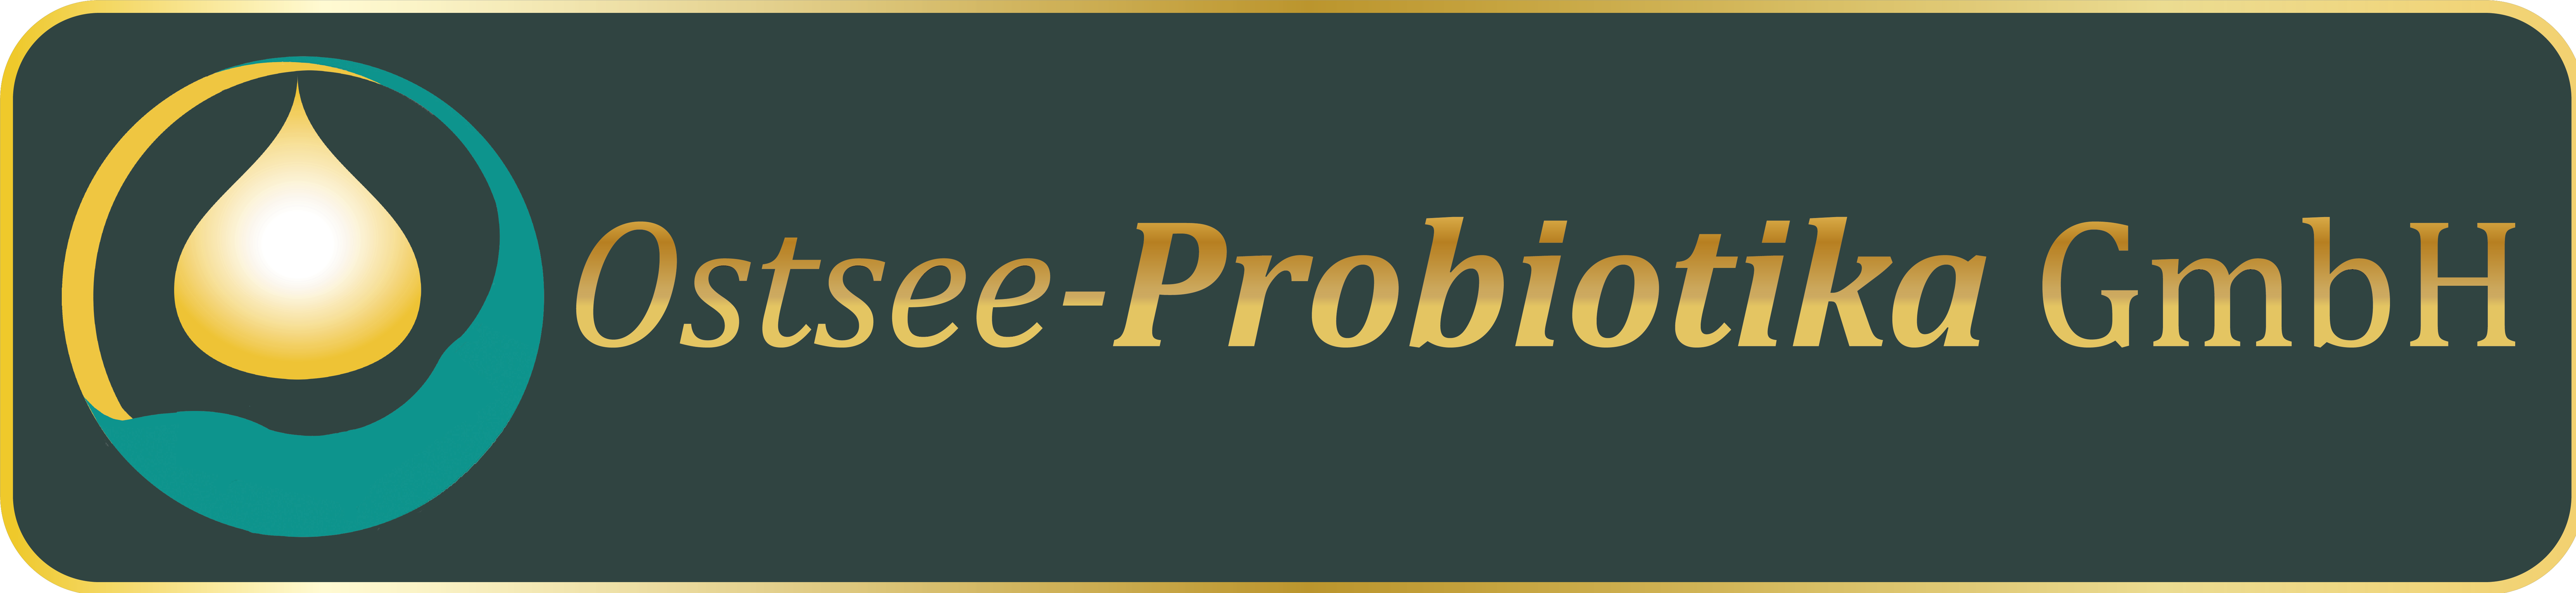 Ostsee Probiotika Logo